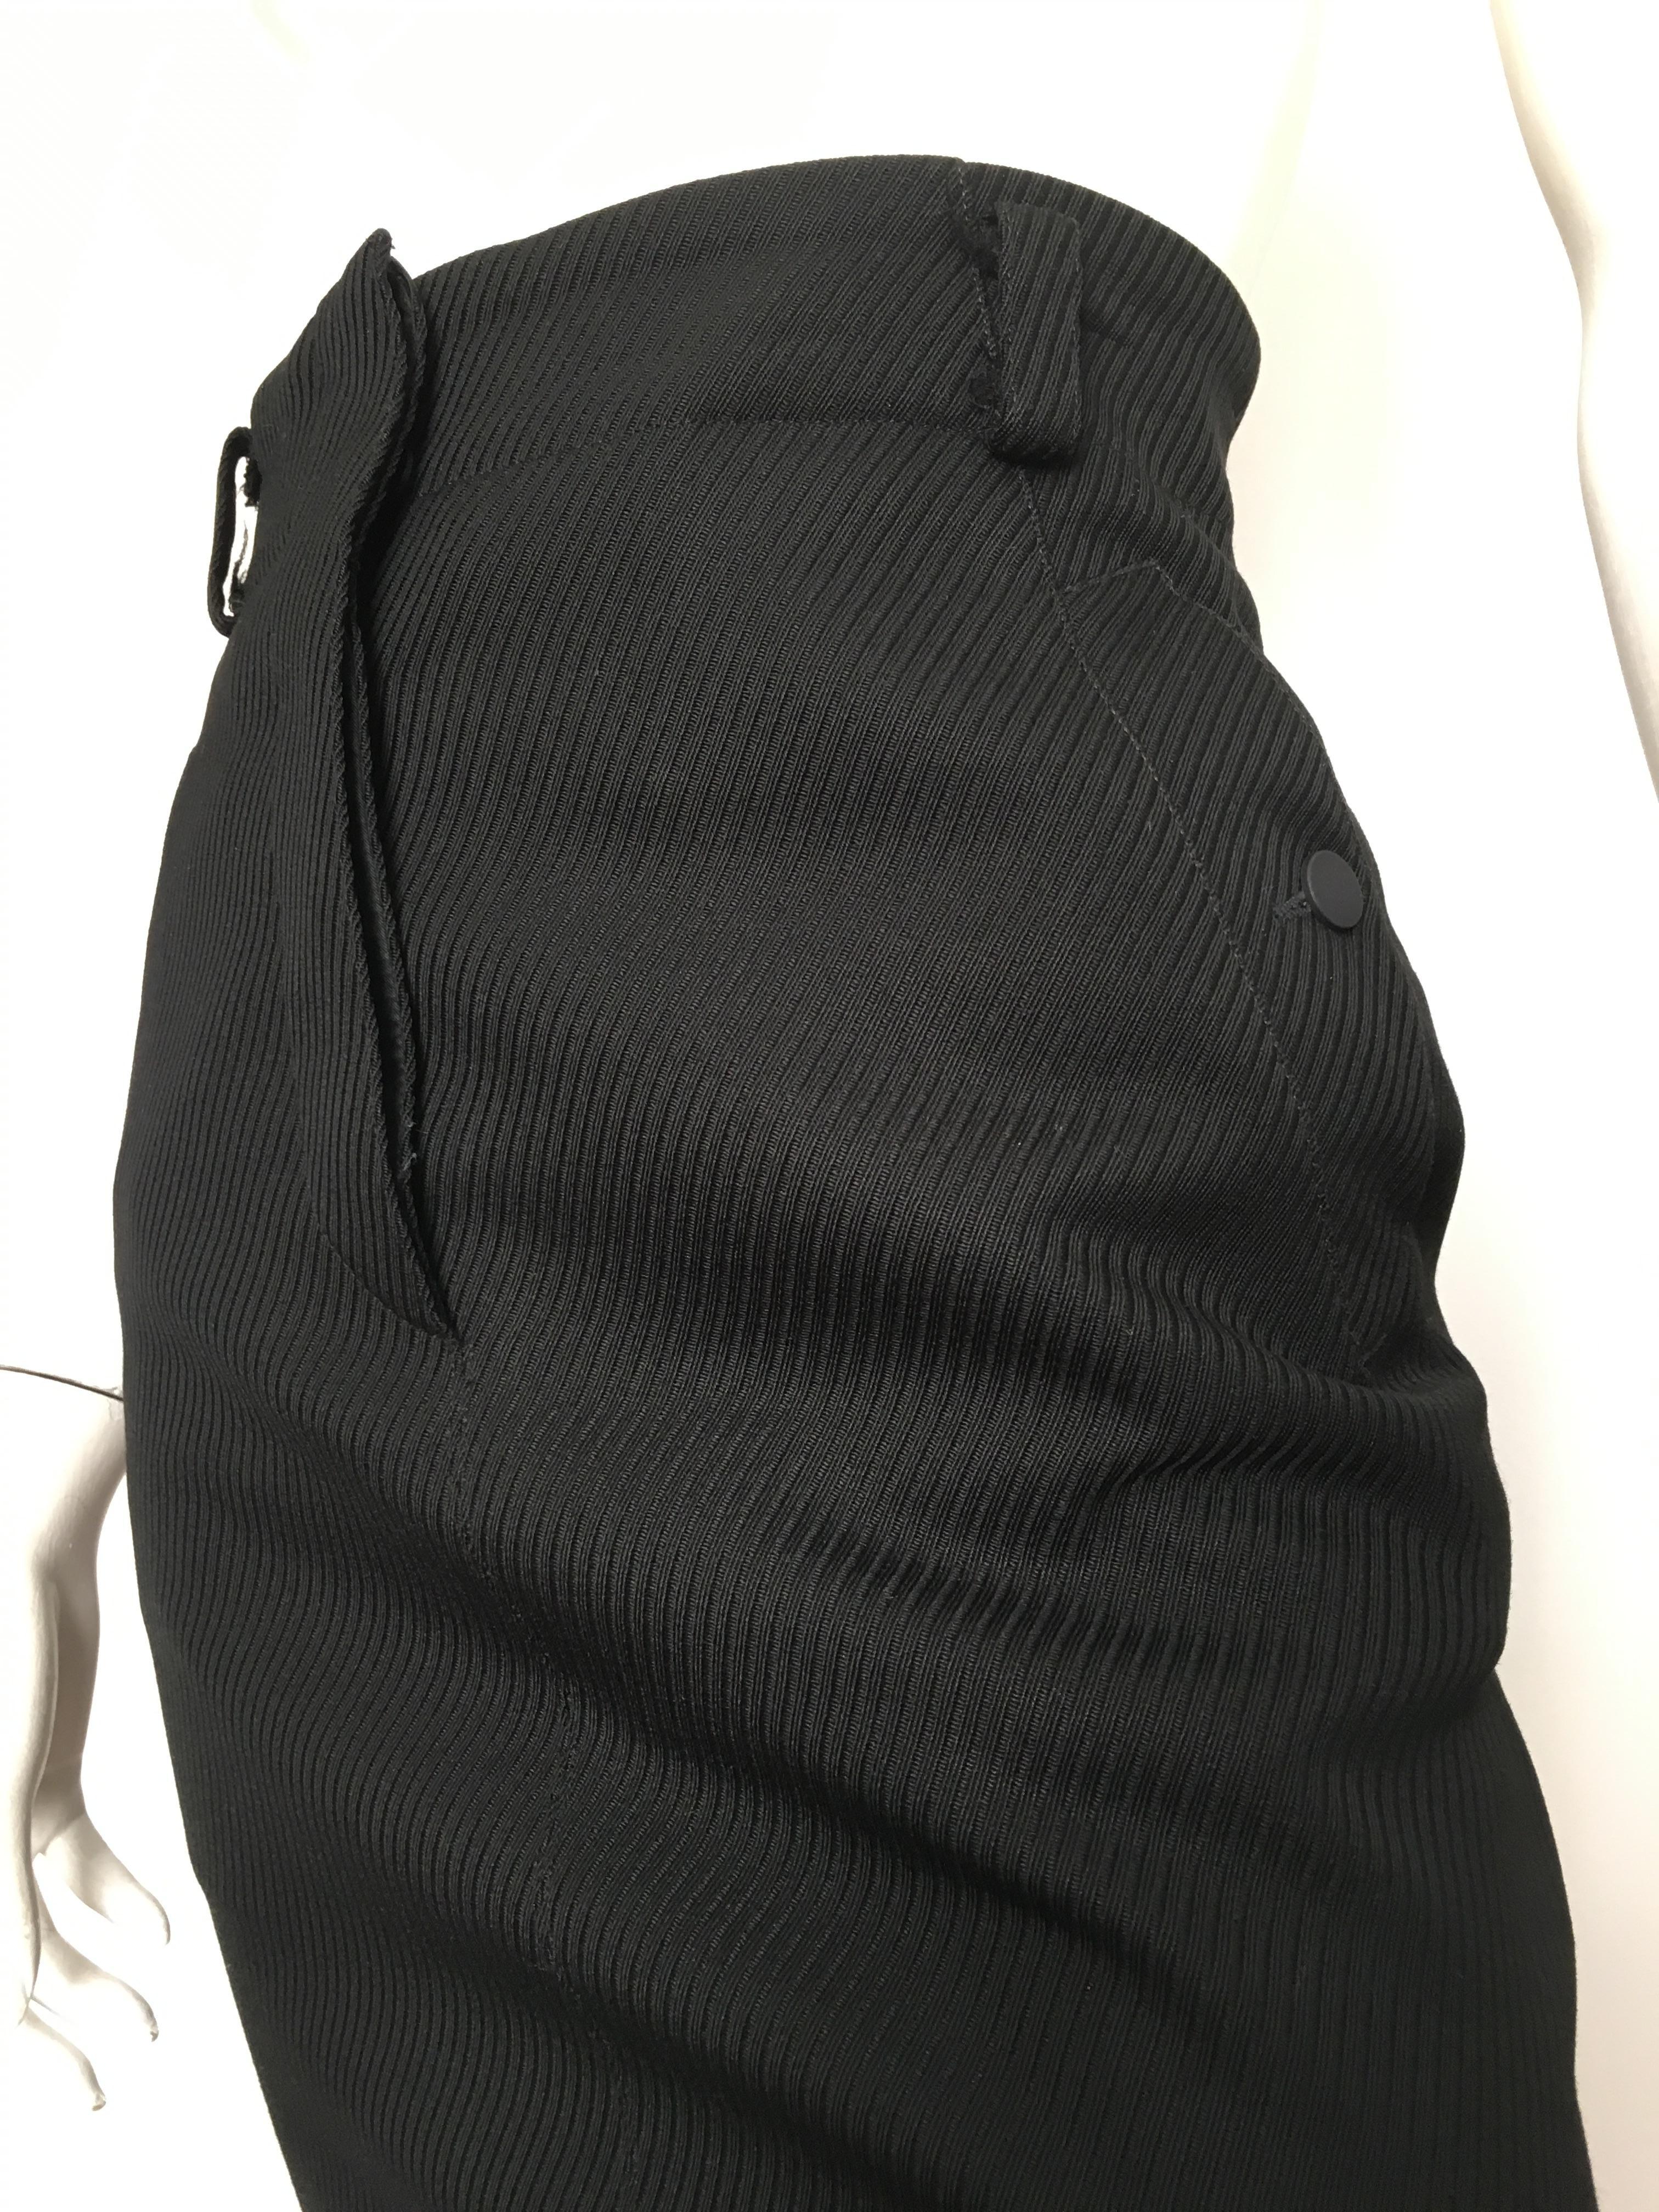 Azzedine Alaia 1980s Black Pencil Skirt with Pockets Size 4. 7